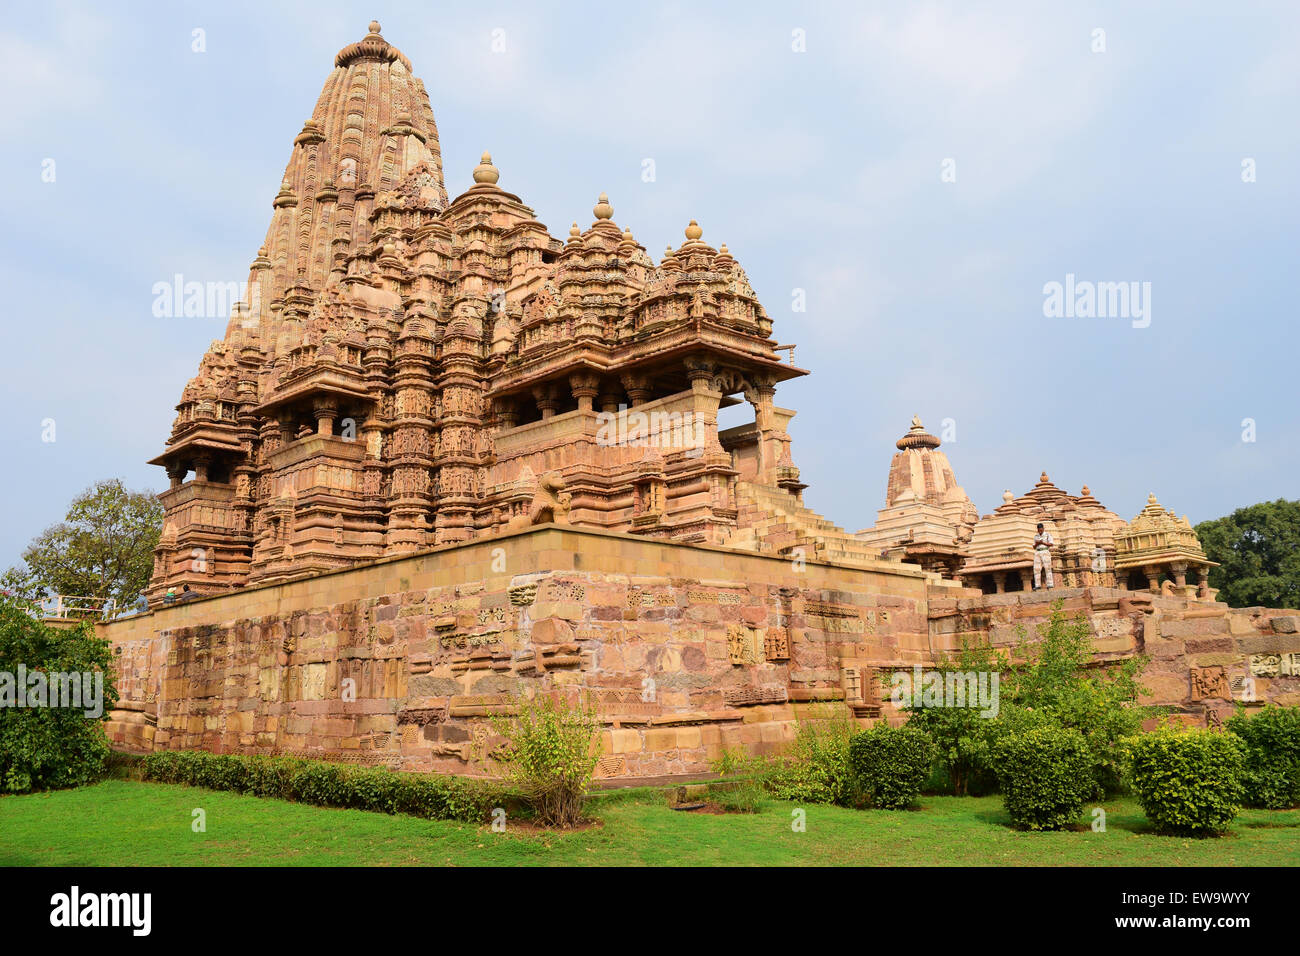 Kandariya Mahadeva Temple Khajuraho Group of Monuments Largest Khajuraho Temple India Stock Photo